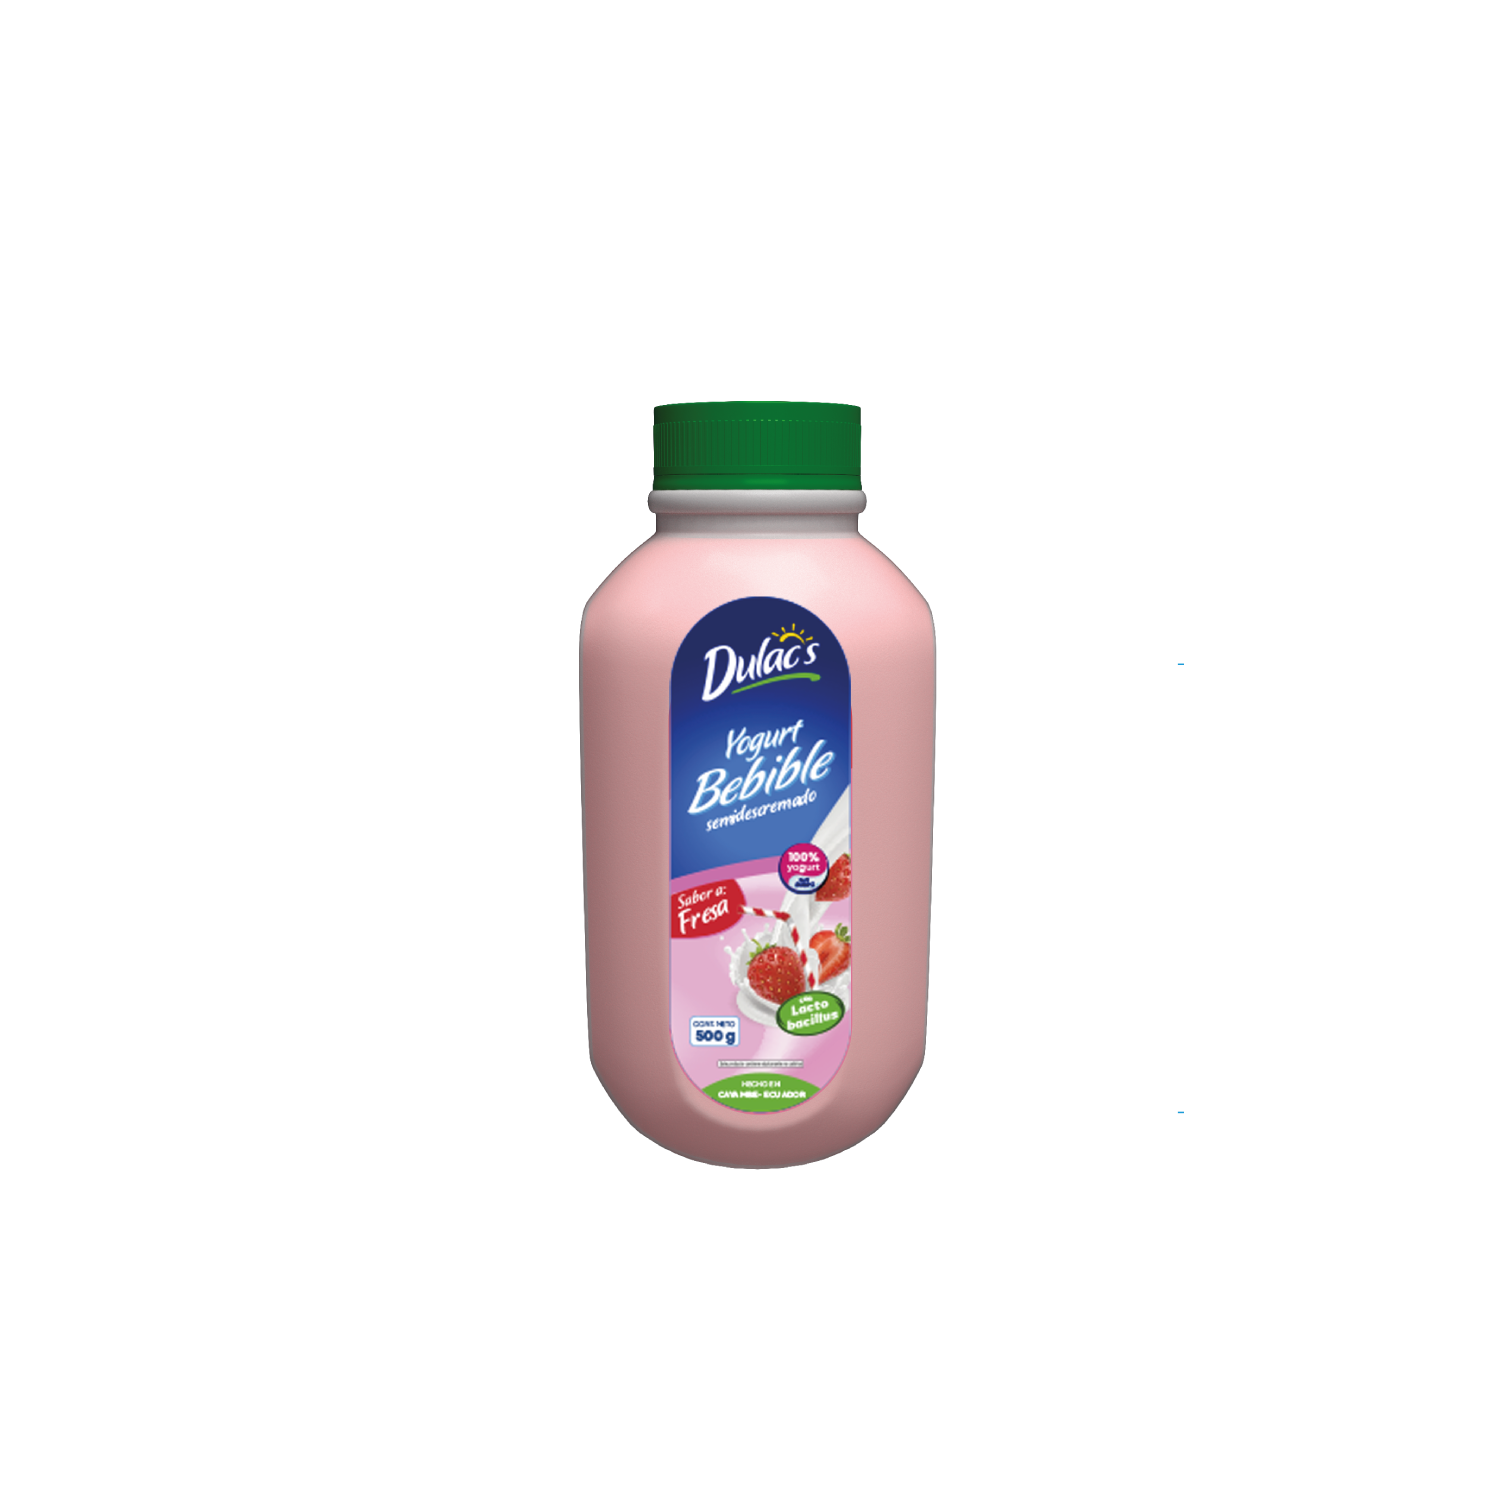 Dulacs Yogurt Bebible 500G